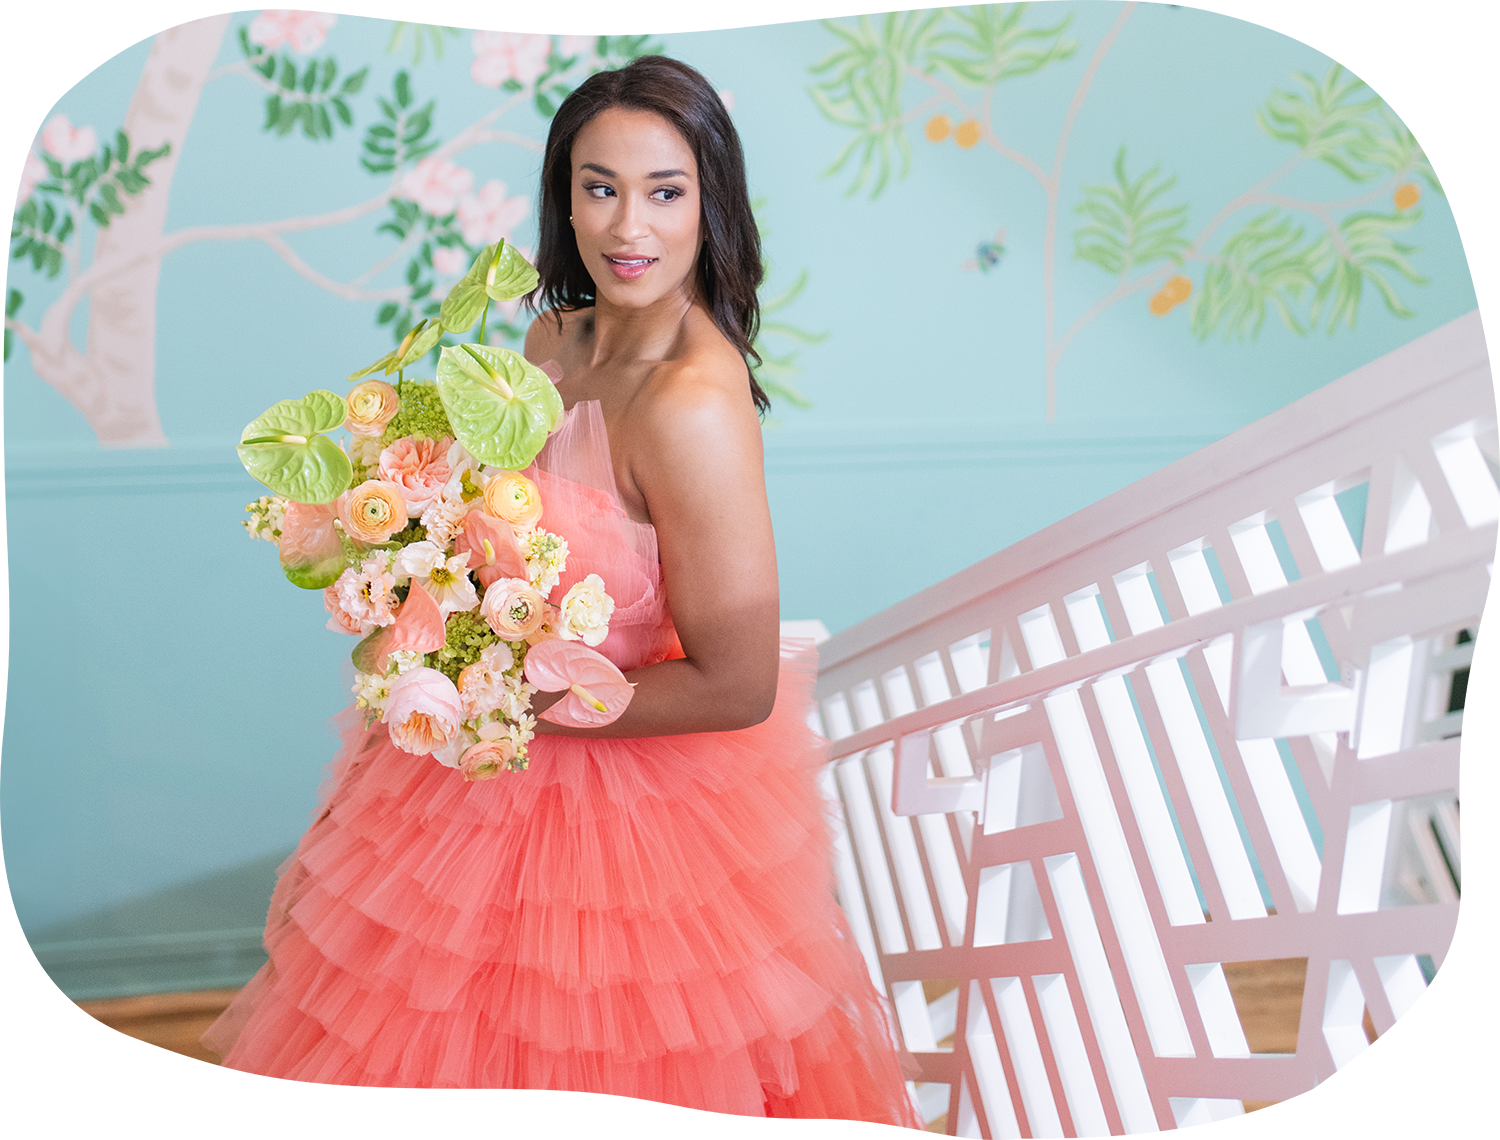 Red Currant Bouquet Kit, DIY Wedding Flowers, Flower Moxie